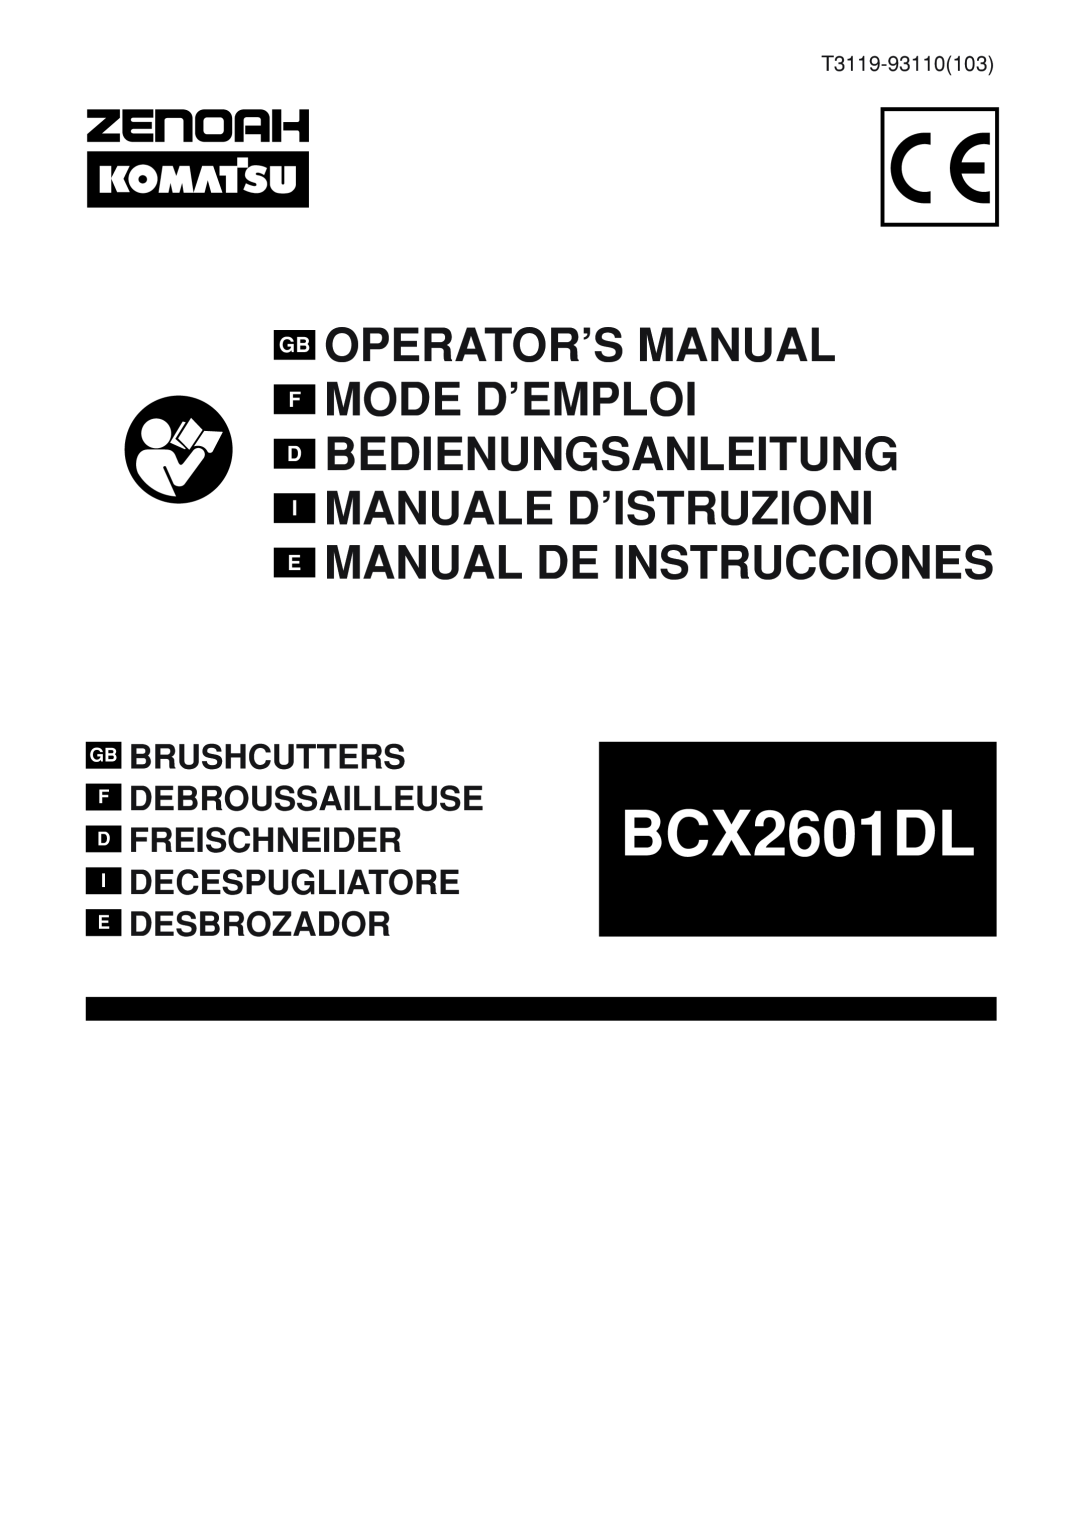 Zenoah BCX2601DL manual Gb Operator’S Manual F Mode D’Emploi D Bedienungsanleitung, Brushcutters, Debroussailleuse 